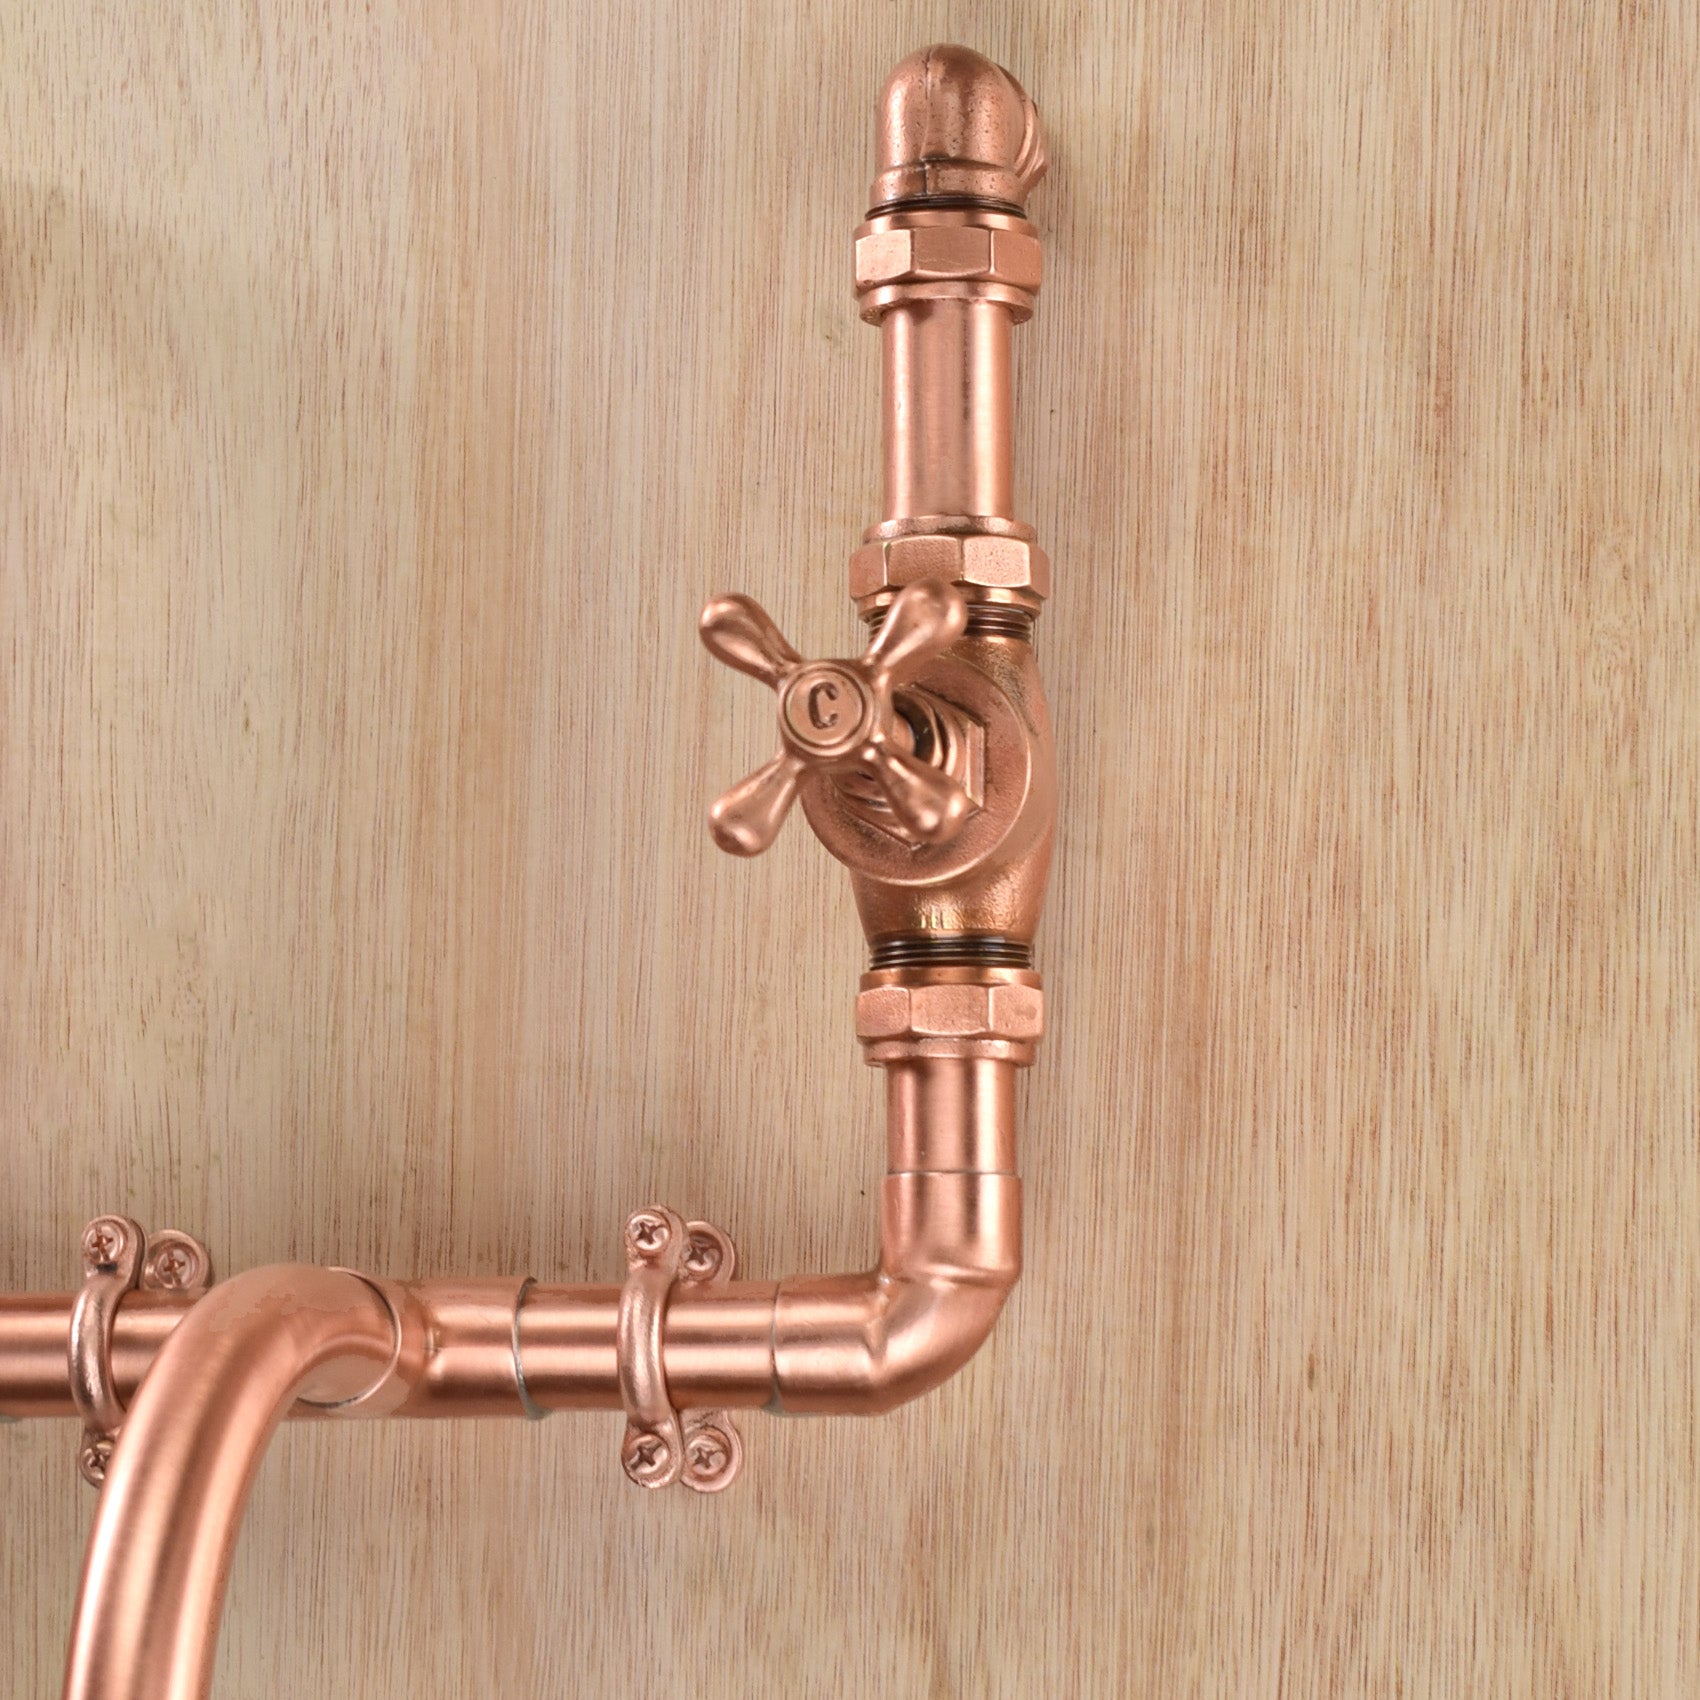 Copper Tap - Purity - Handmade unique crosshead tap